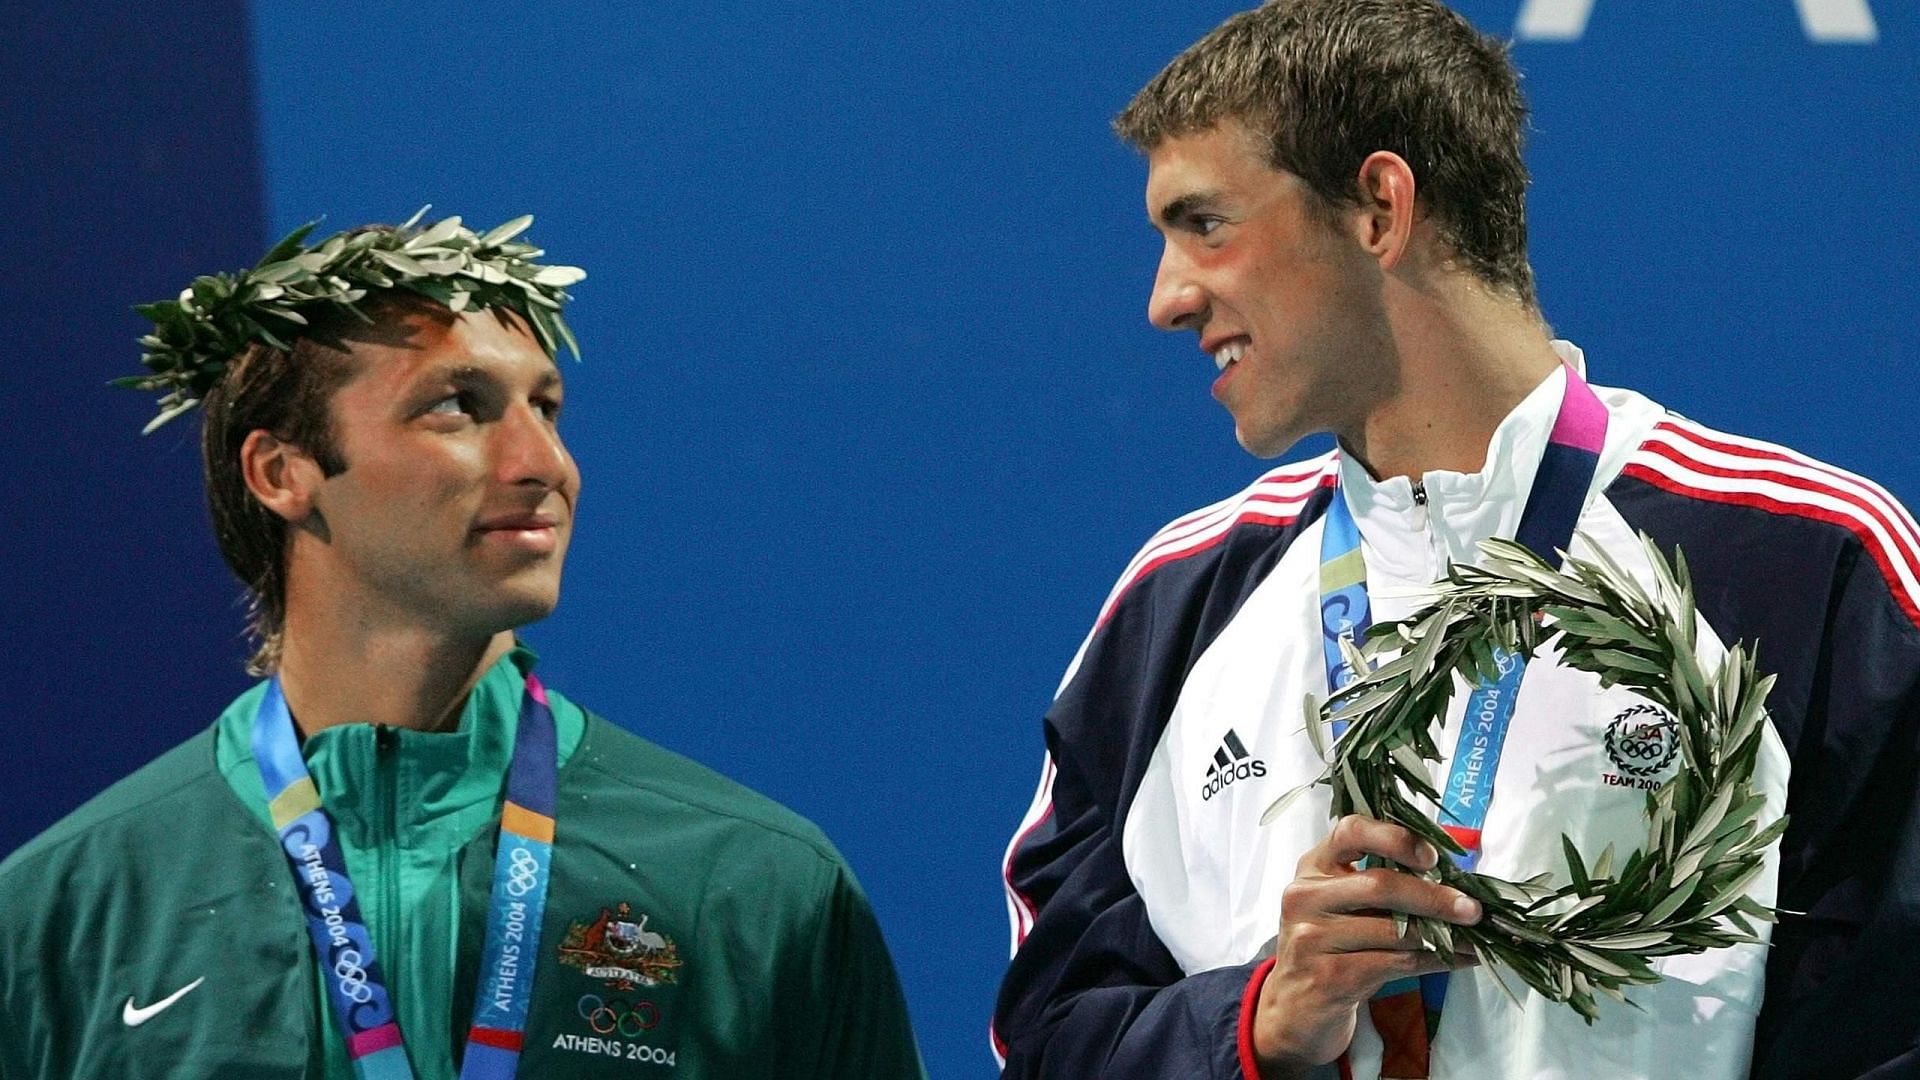 Michael Phelps and Ian Thorpe (Image via Eurosport)